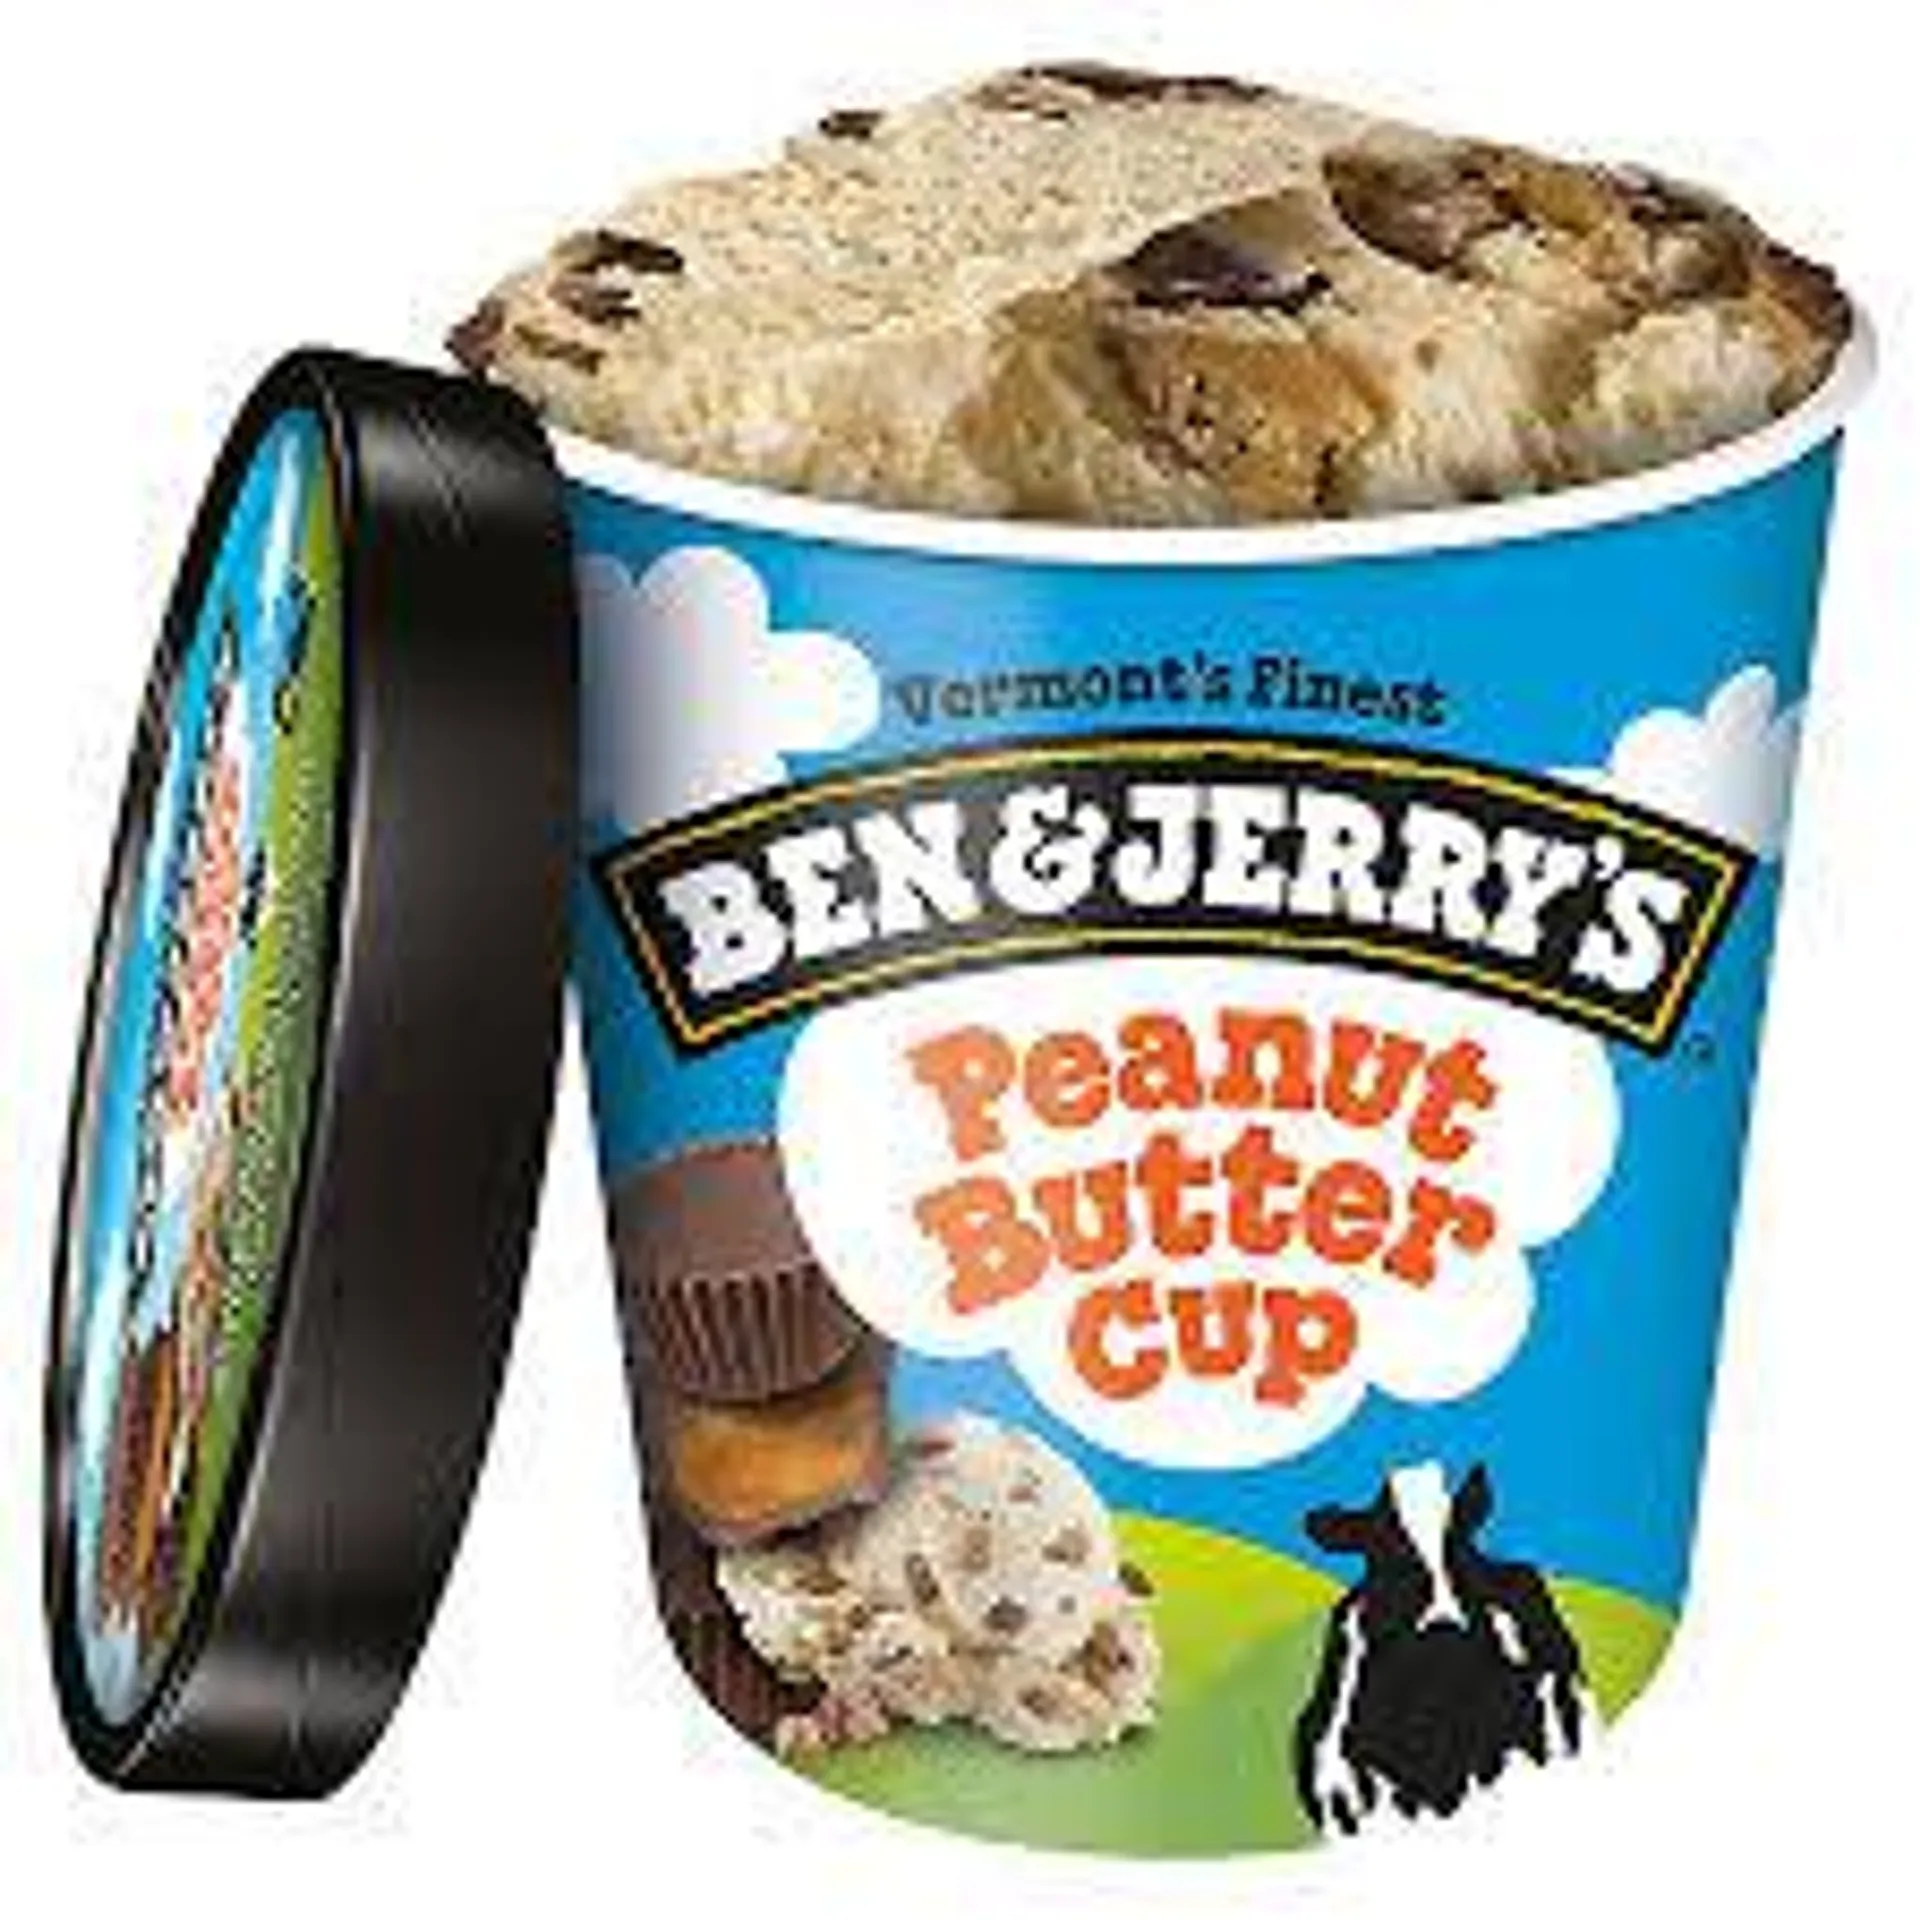 Ben & Jerry's - Peanut Butter Cup IceCream 1 PT